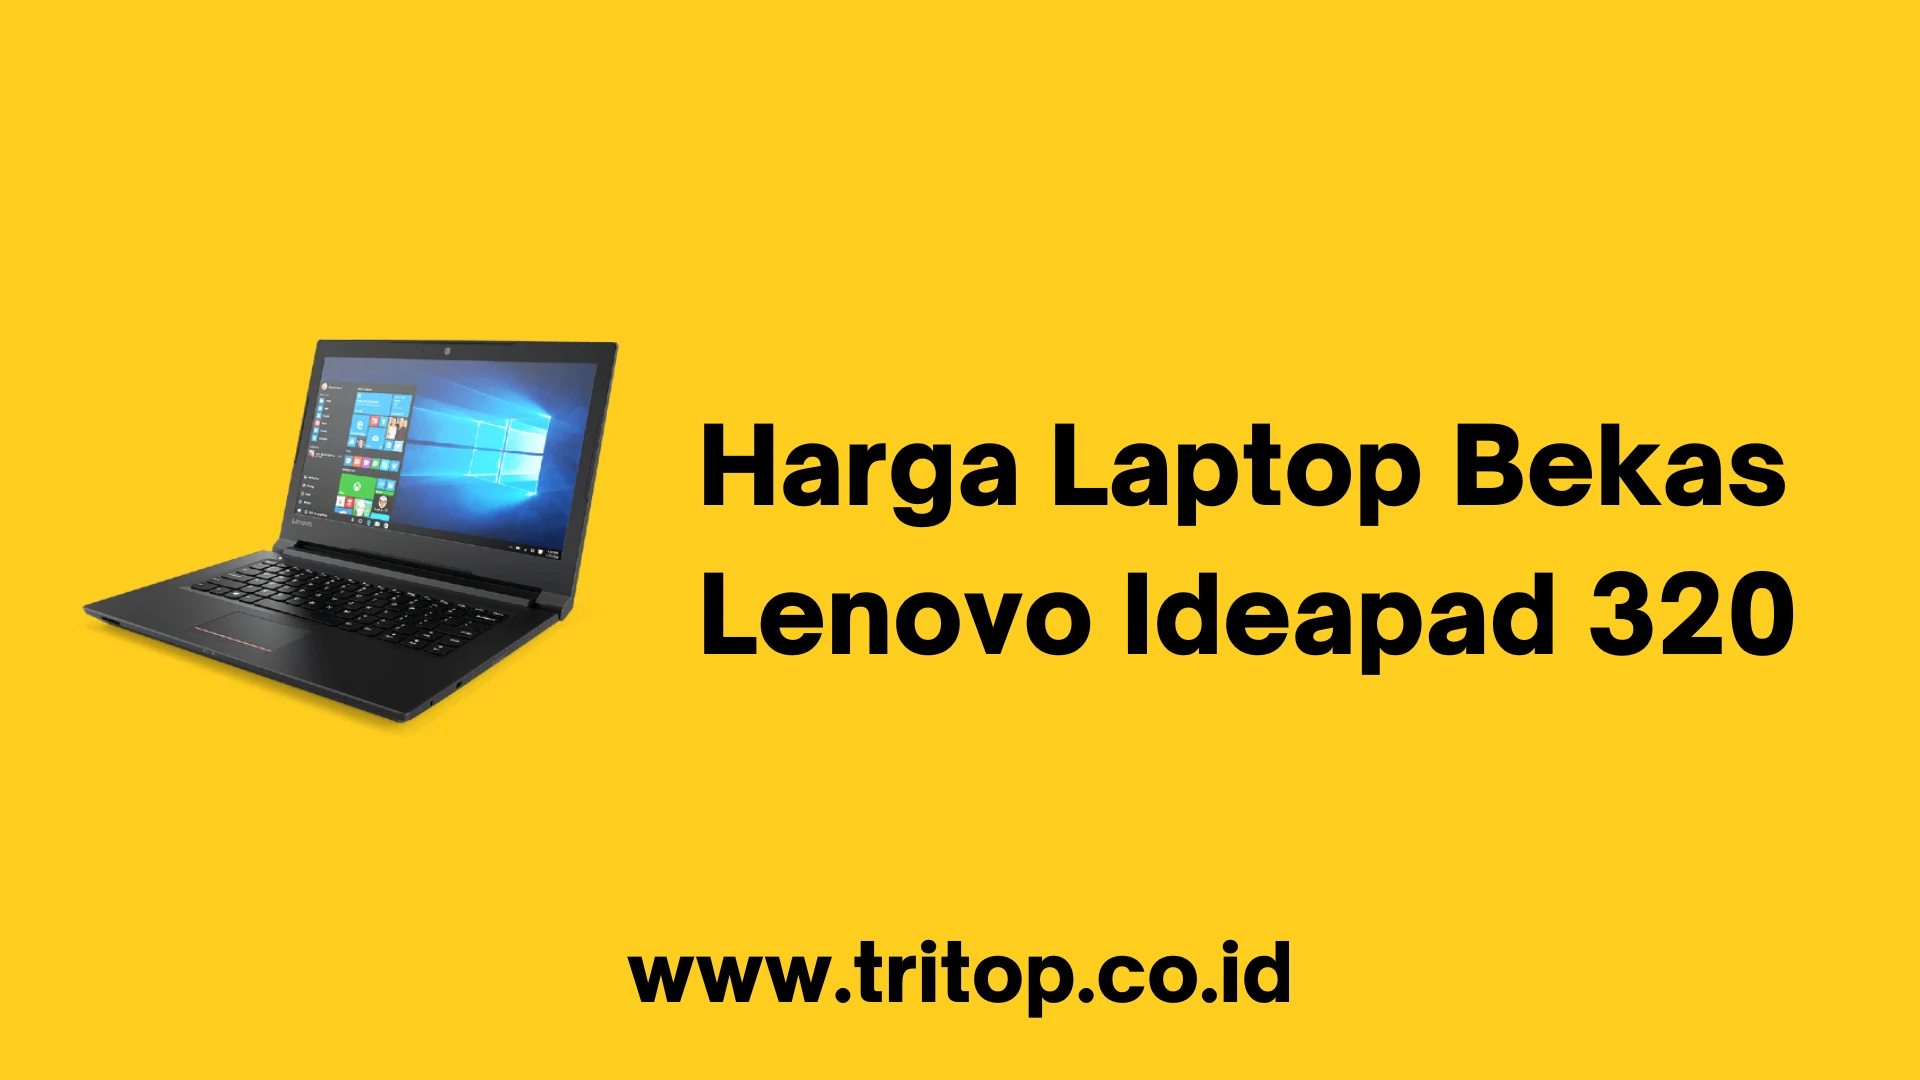 Harga Laptop Bekas Lenovo Ideapad 320